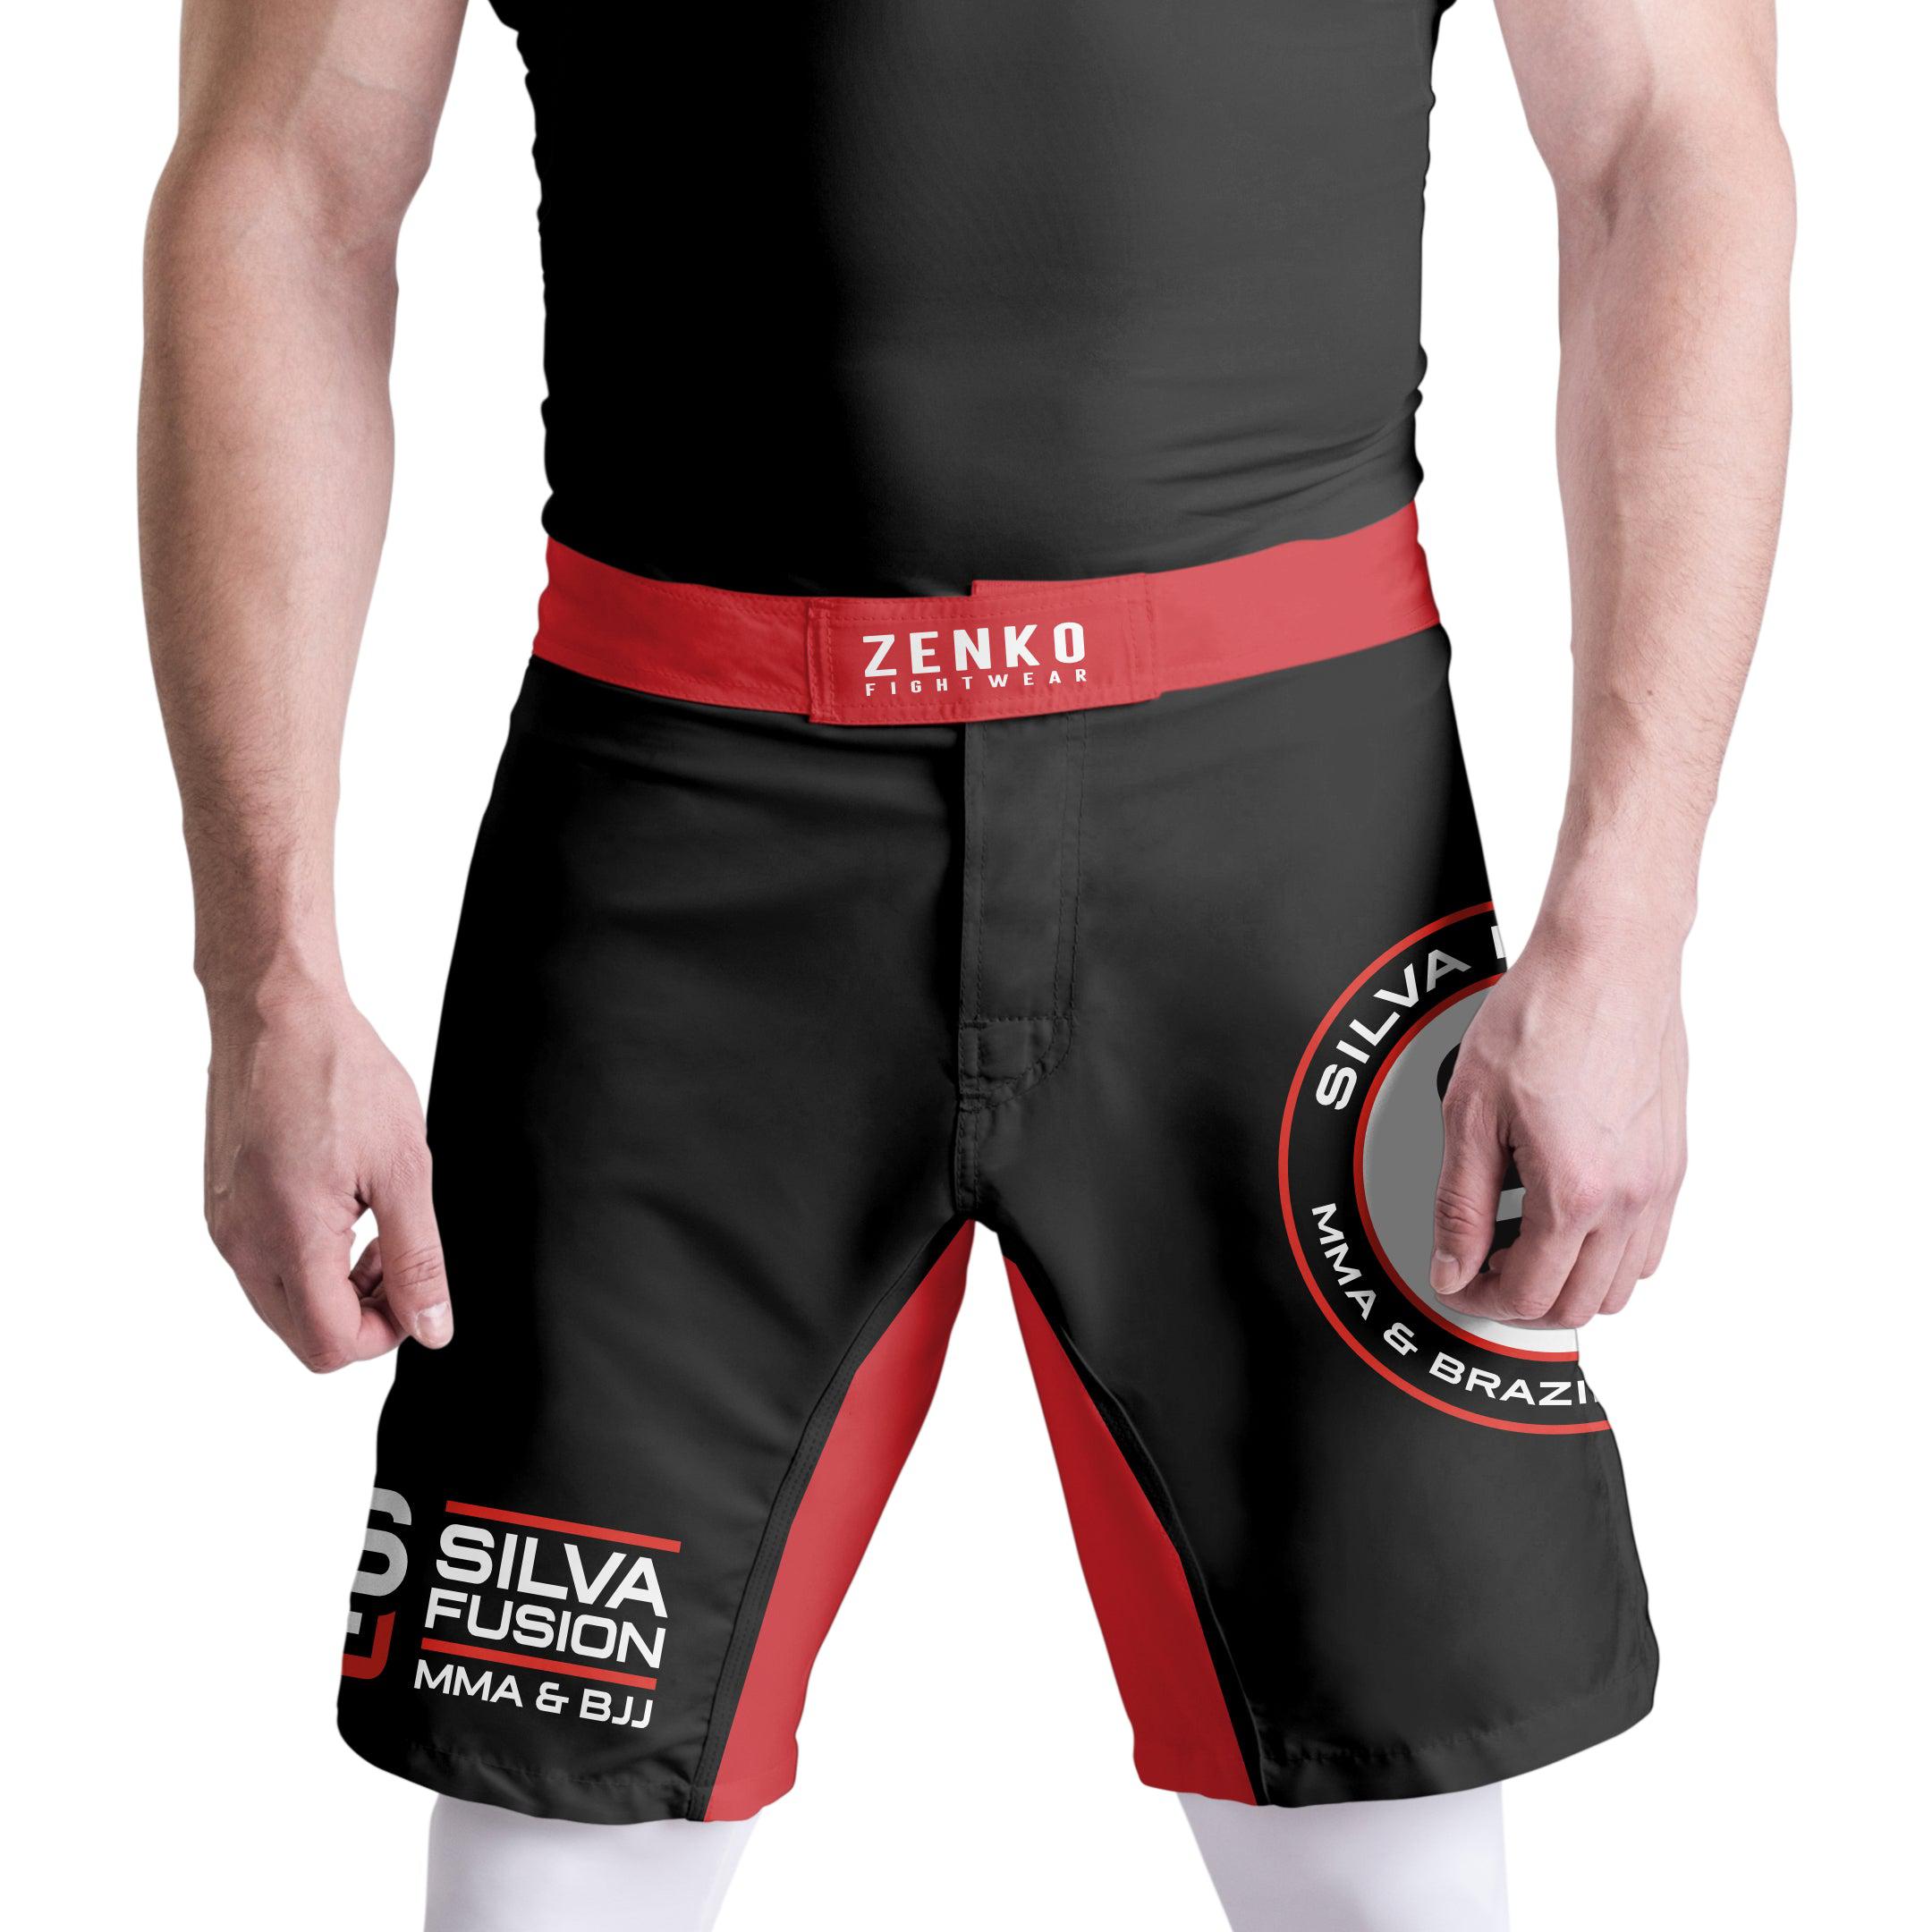 Silva Fusion Fight Shorts